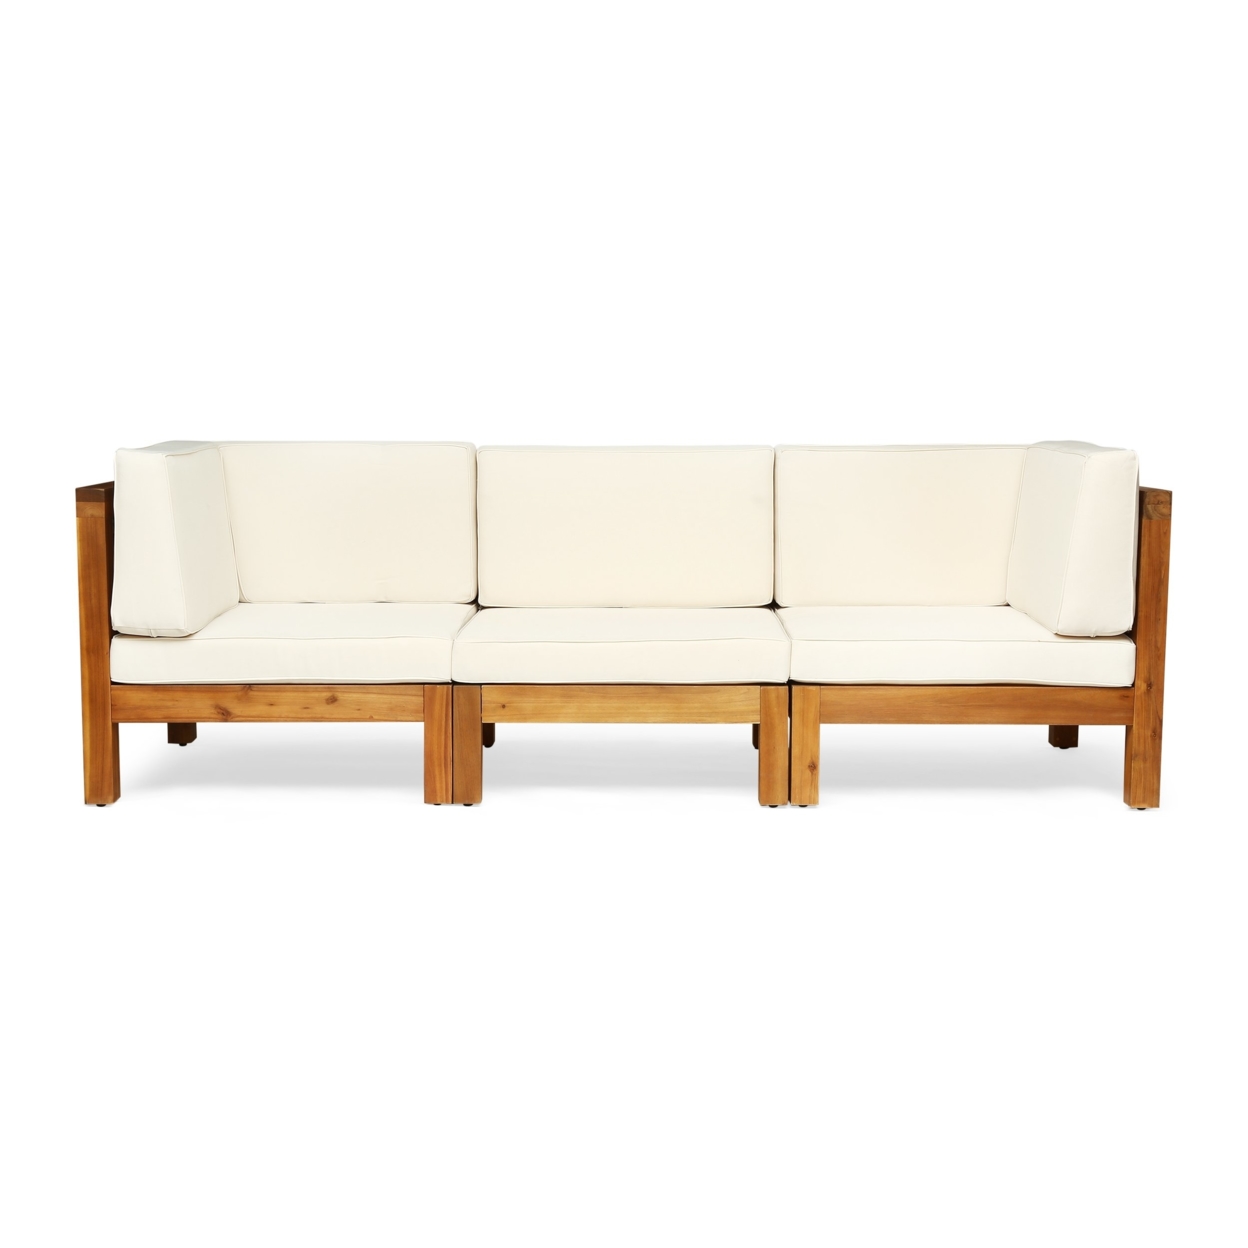 Dawson Outdoor Sectional Sofa Set - 3-Seater - Acacia Wood - Outdoor Cushions - Dark Gray, Weathered Gray